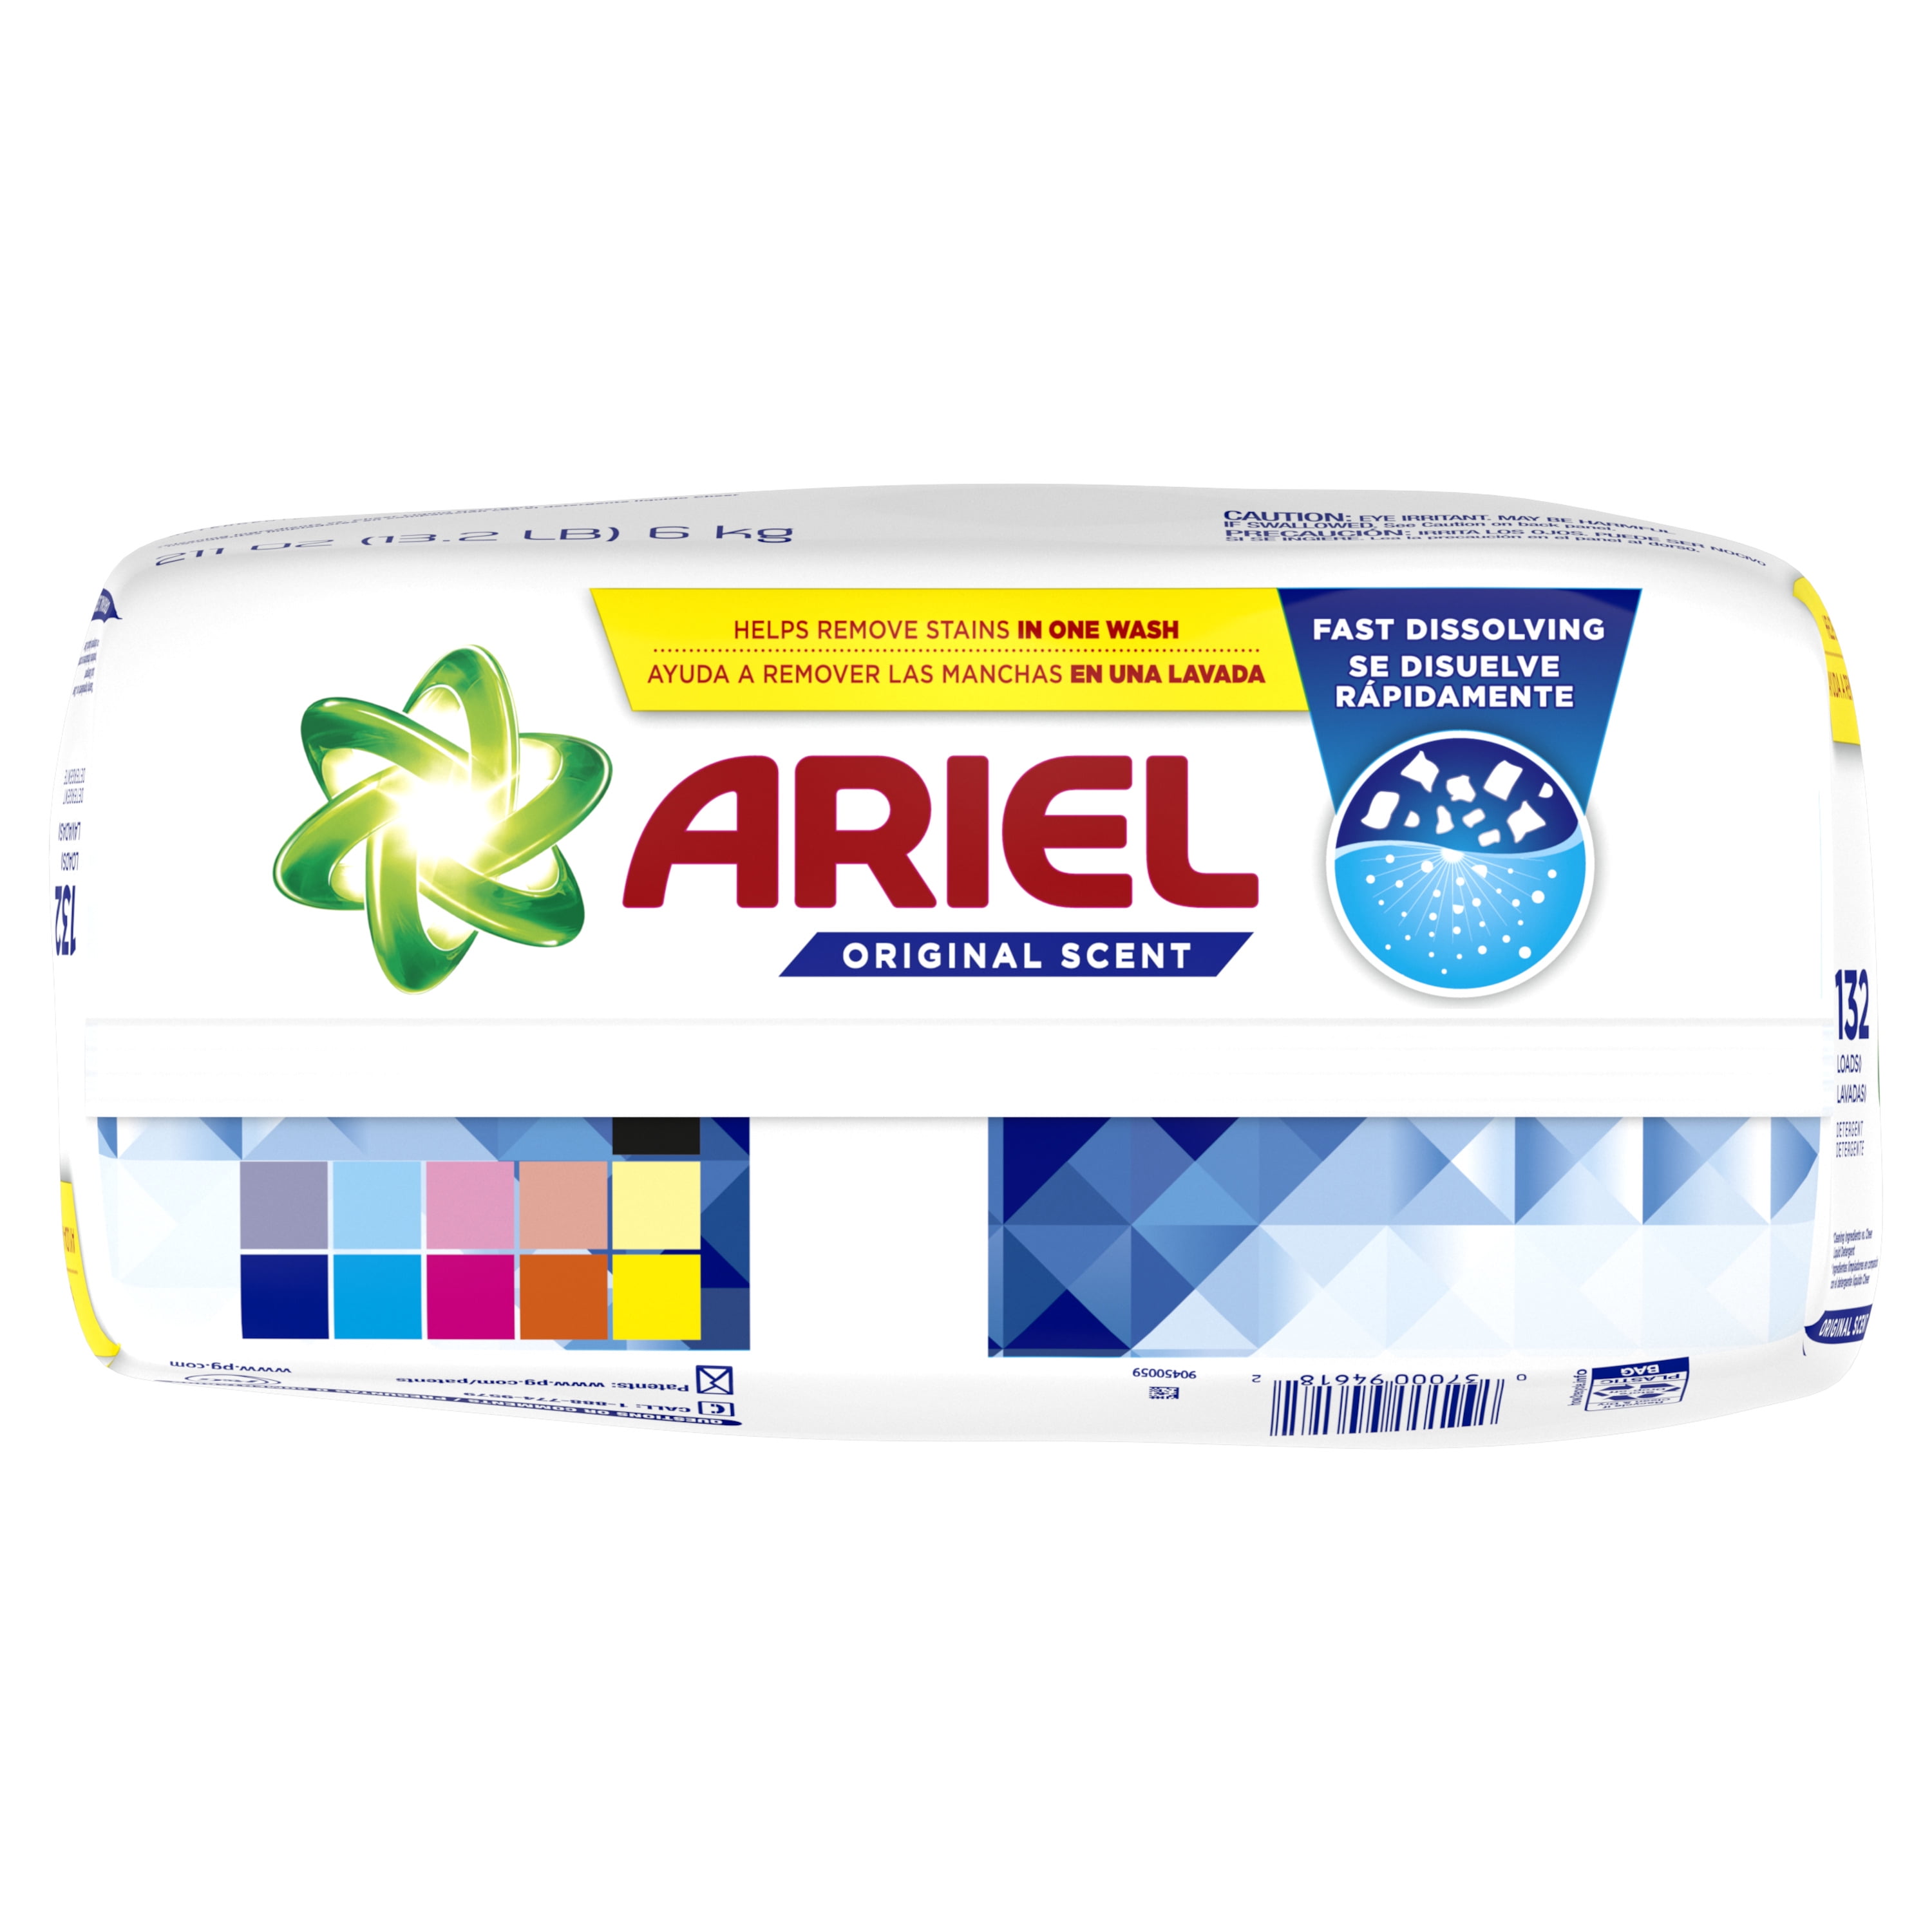 Ariel Powder Laundry Detergent, Original Scent, 211 oz, 132 Loads